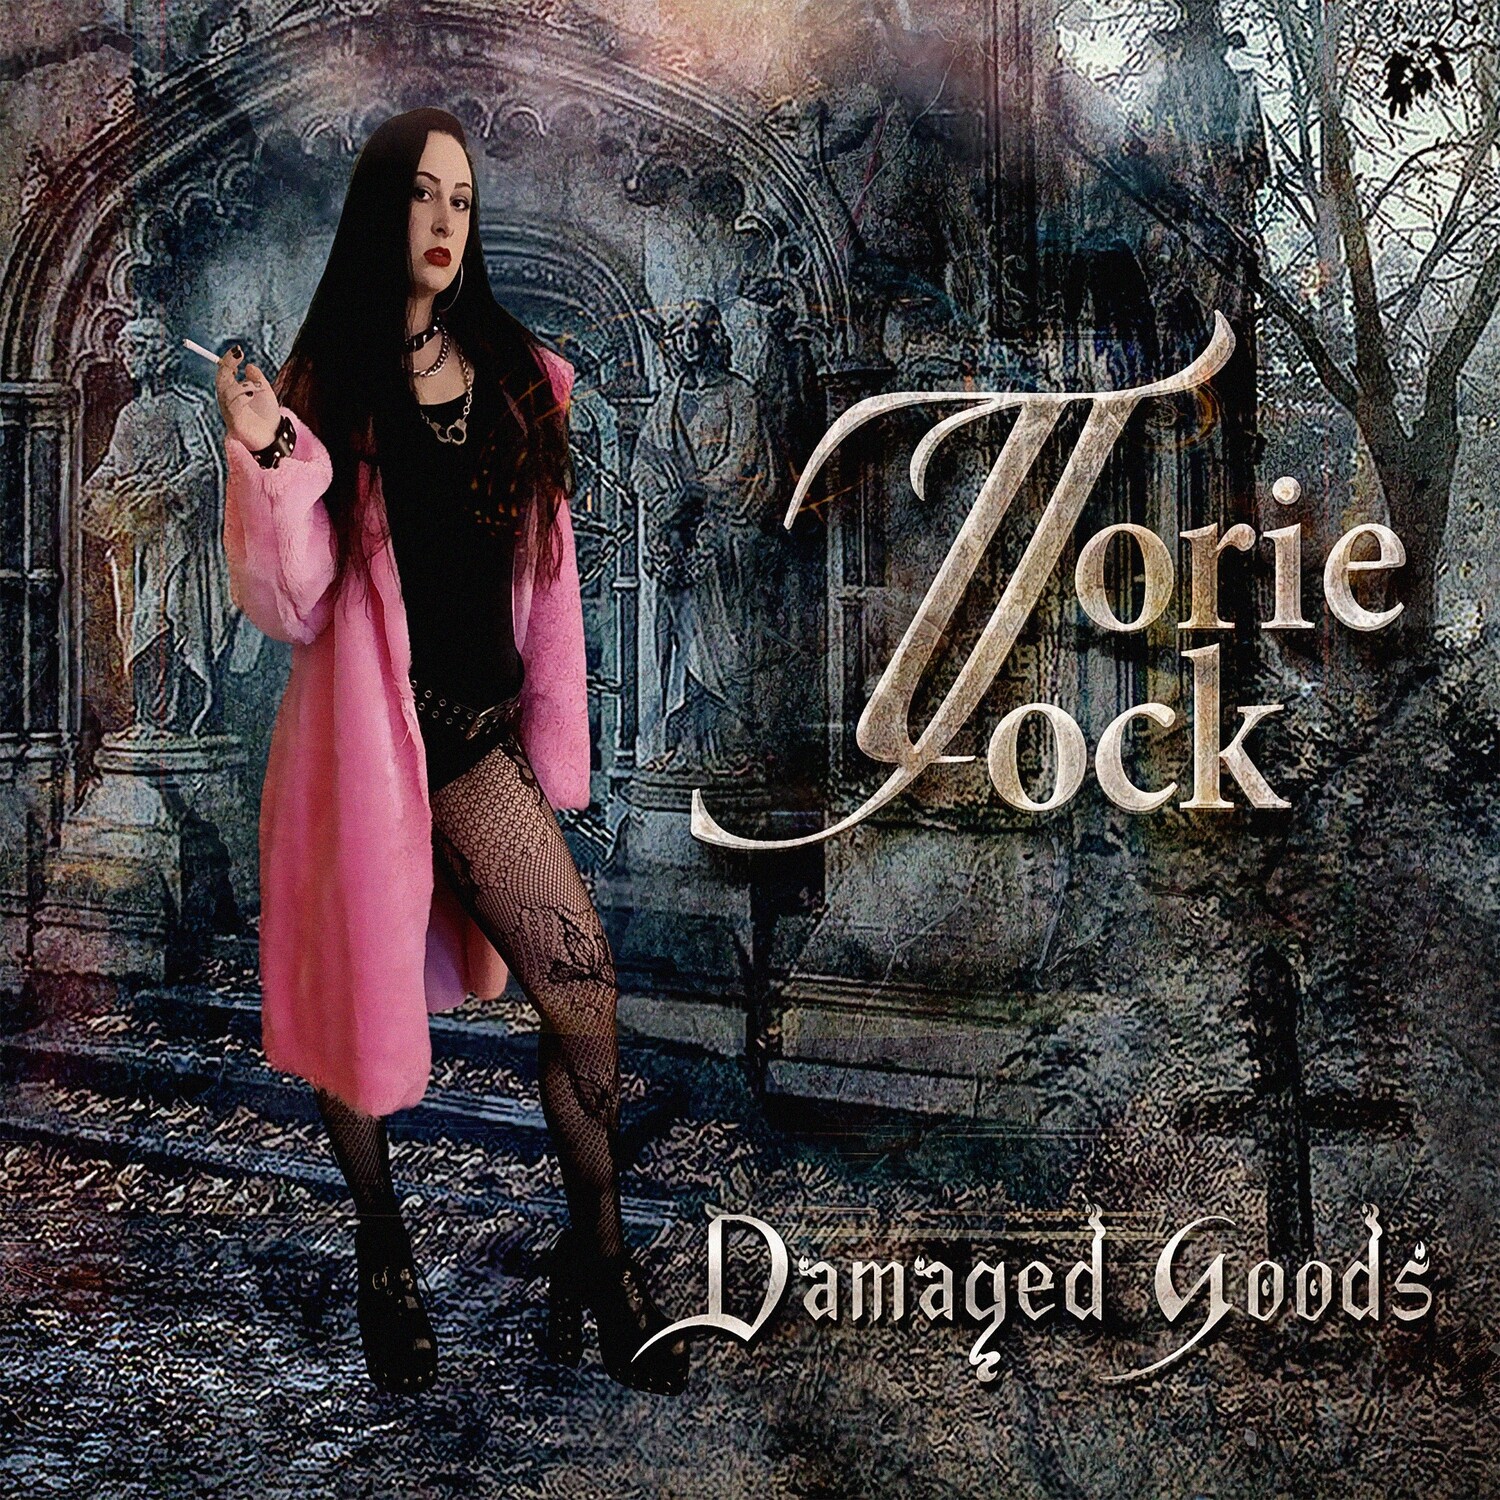 Damaged Goods by Torie Jock [CD]